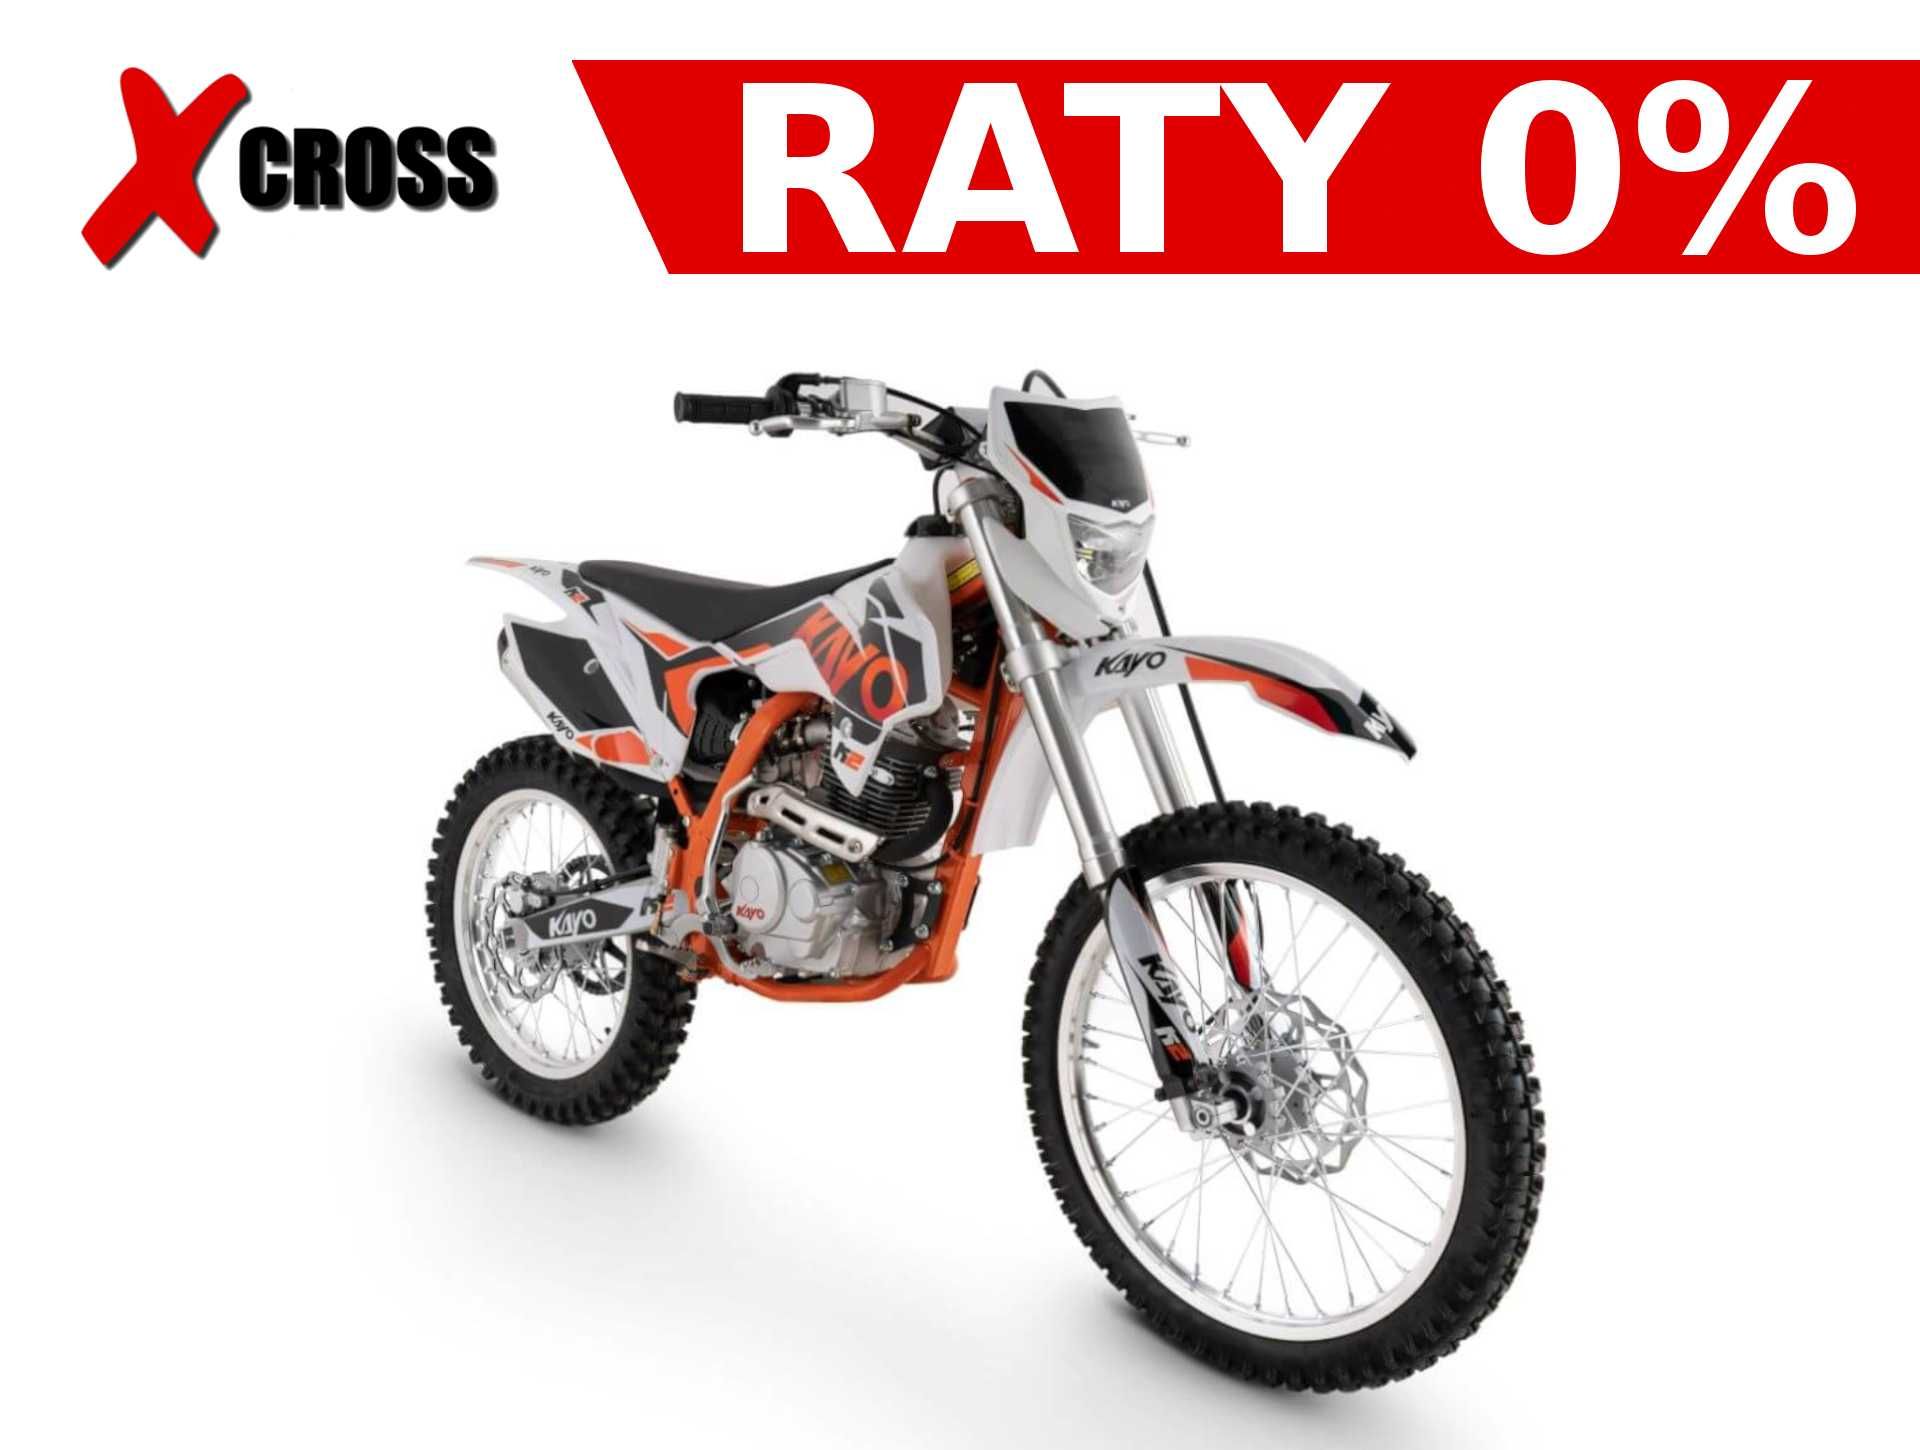 Cross Kayo K2 Enduro 250cc 21/18" Raty Dostawa